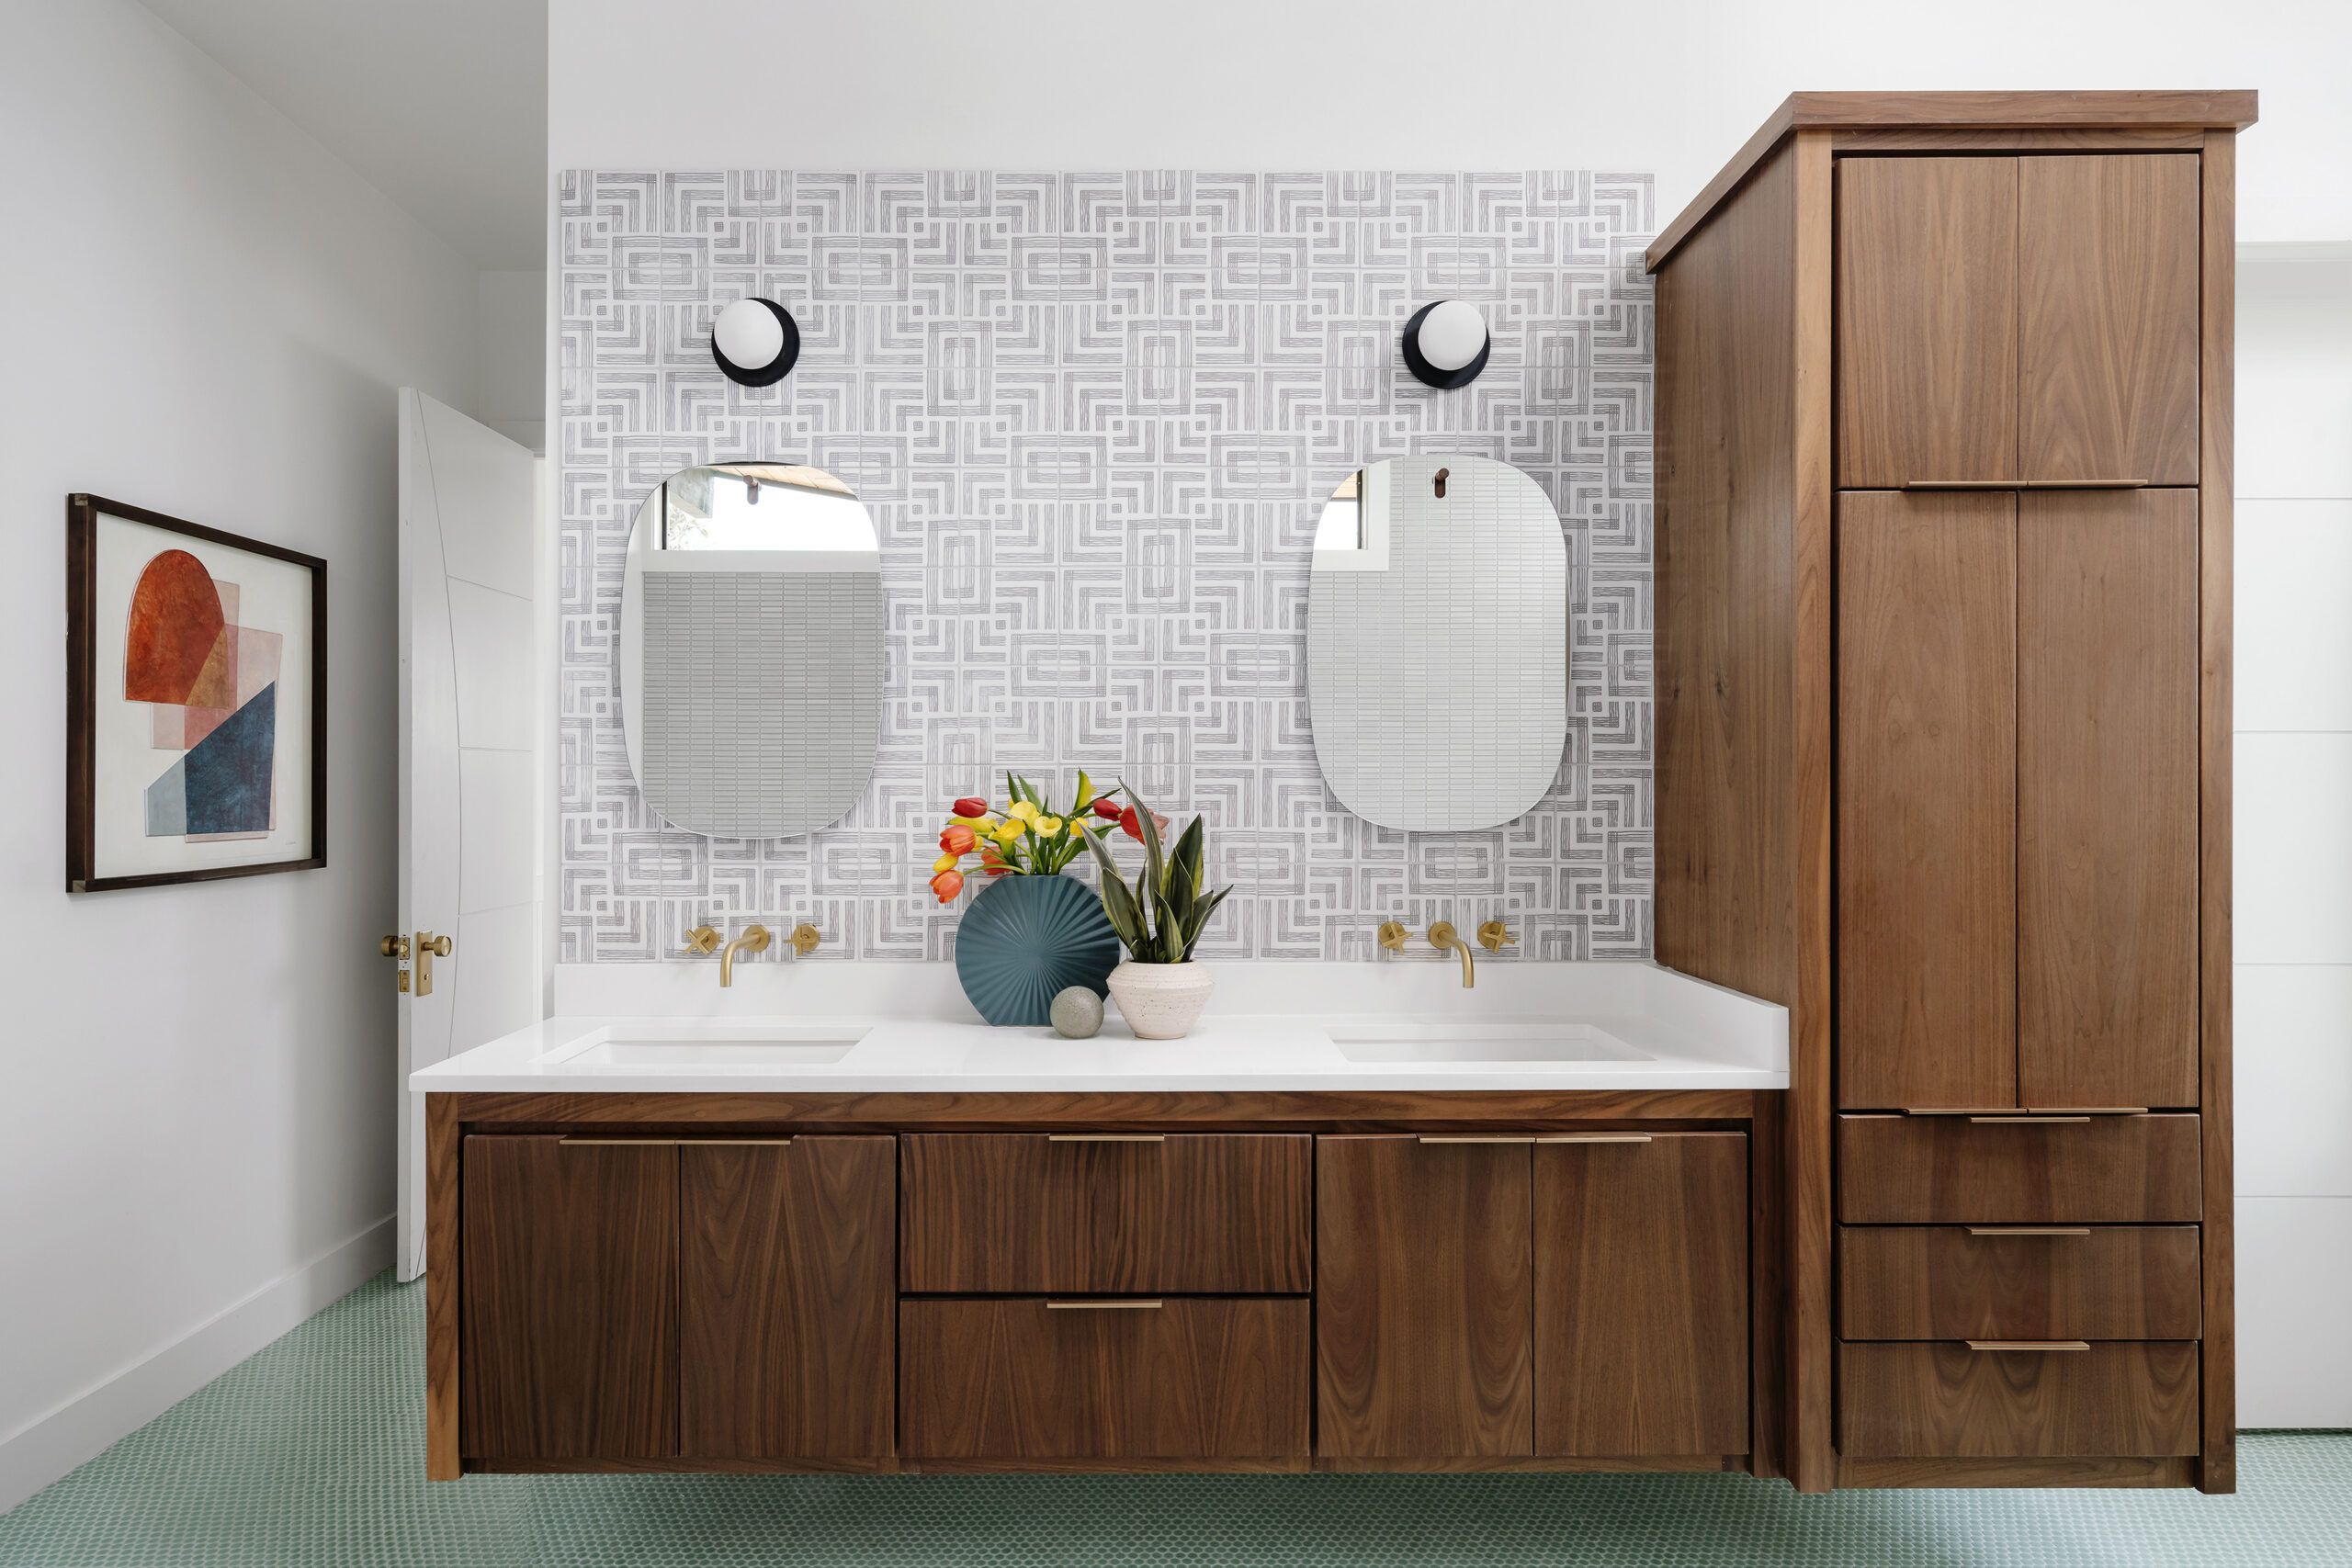 Geometric design in MCM bathroom